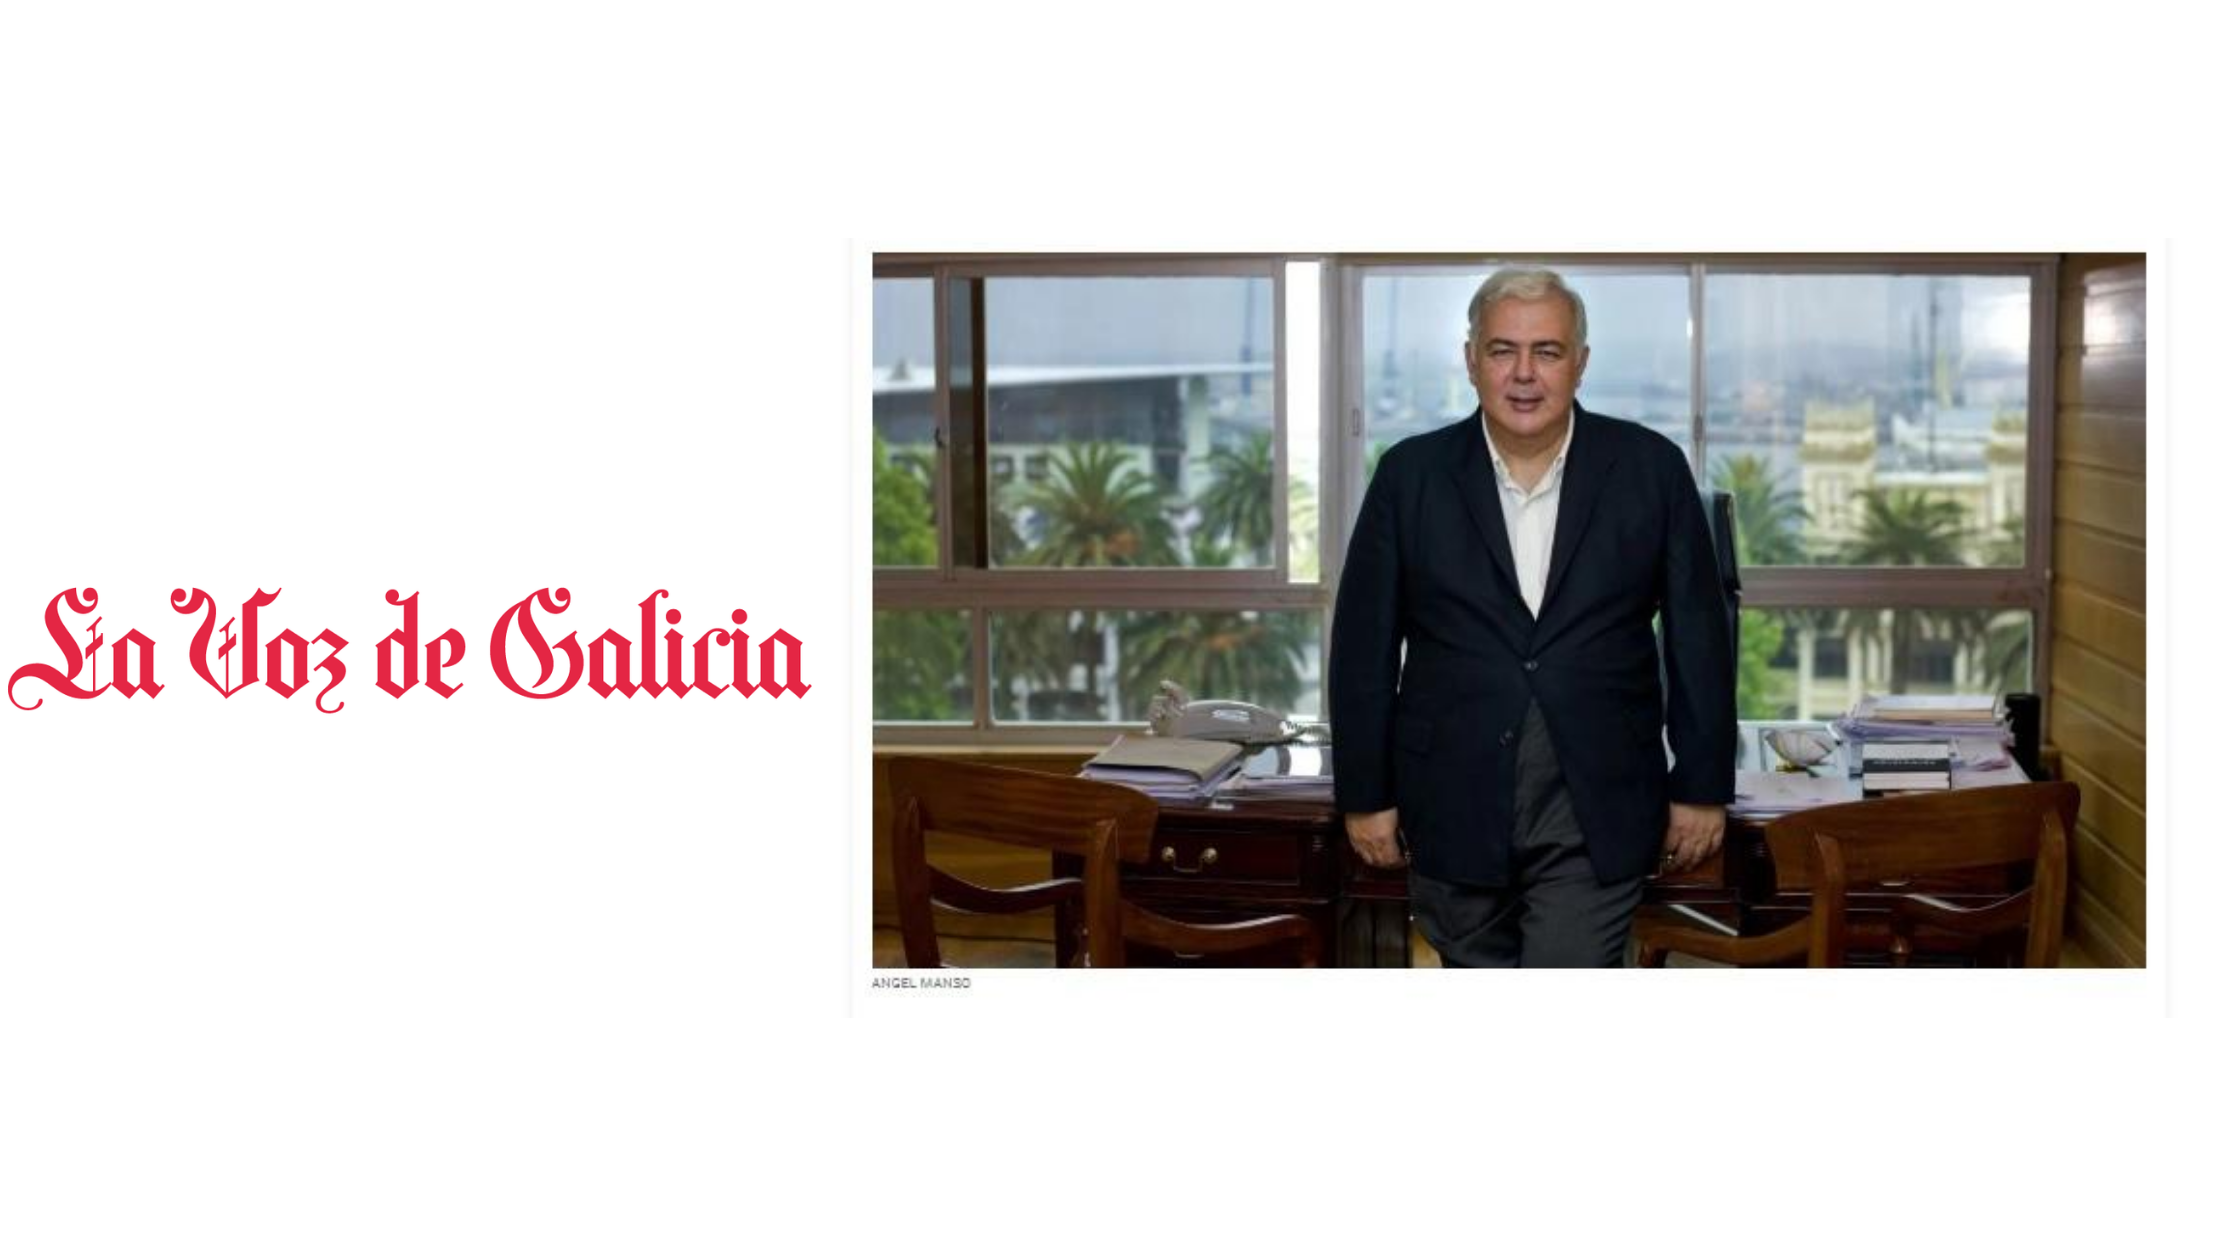 Interview with the CEO of Ecoener, Luis de Valdivia